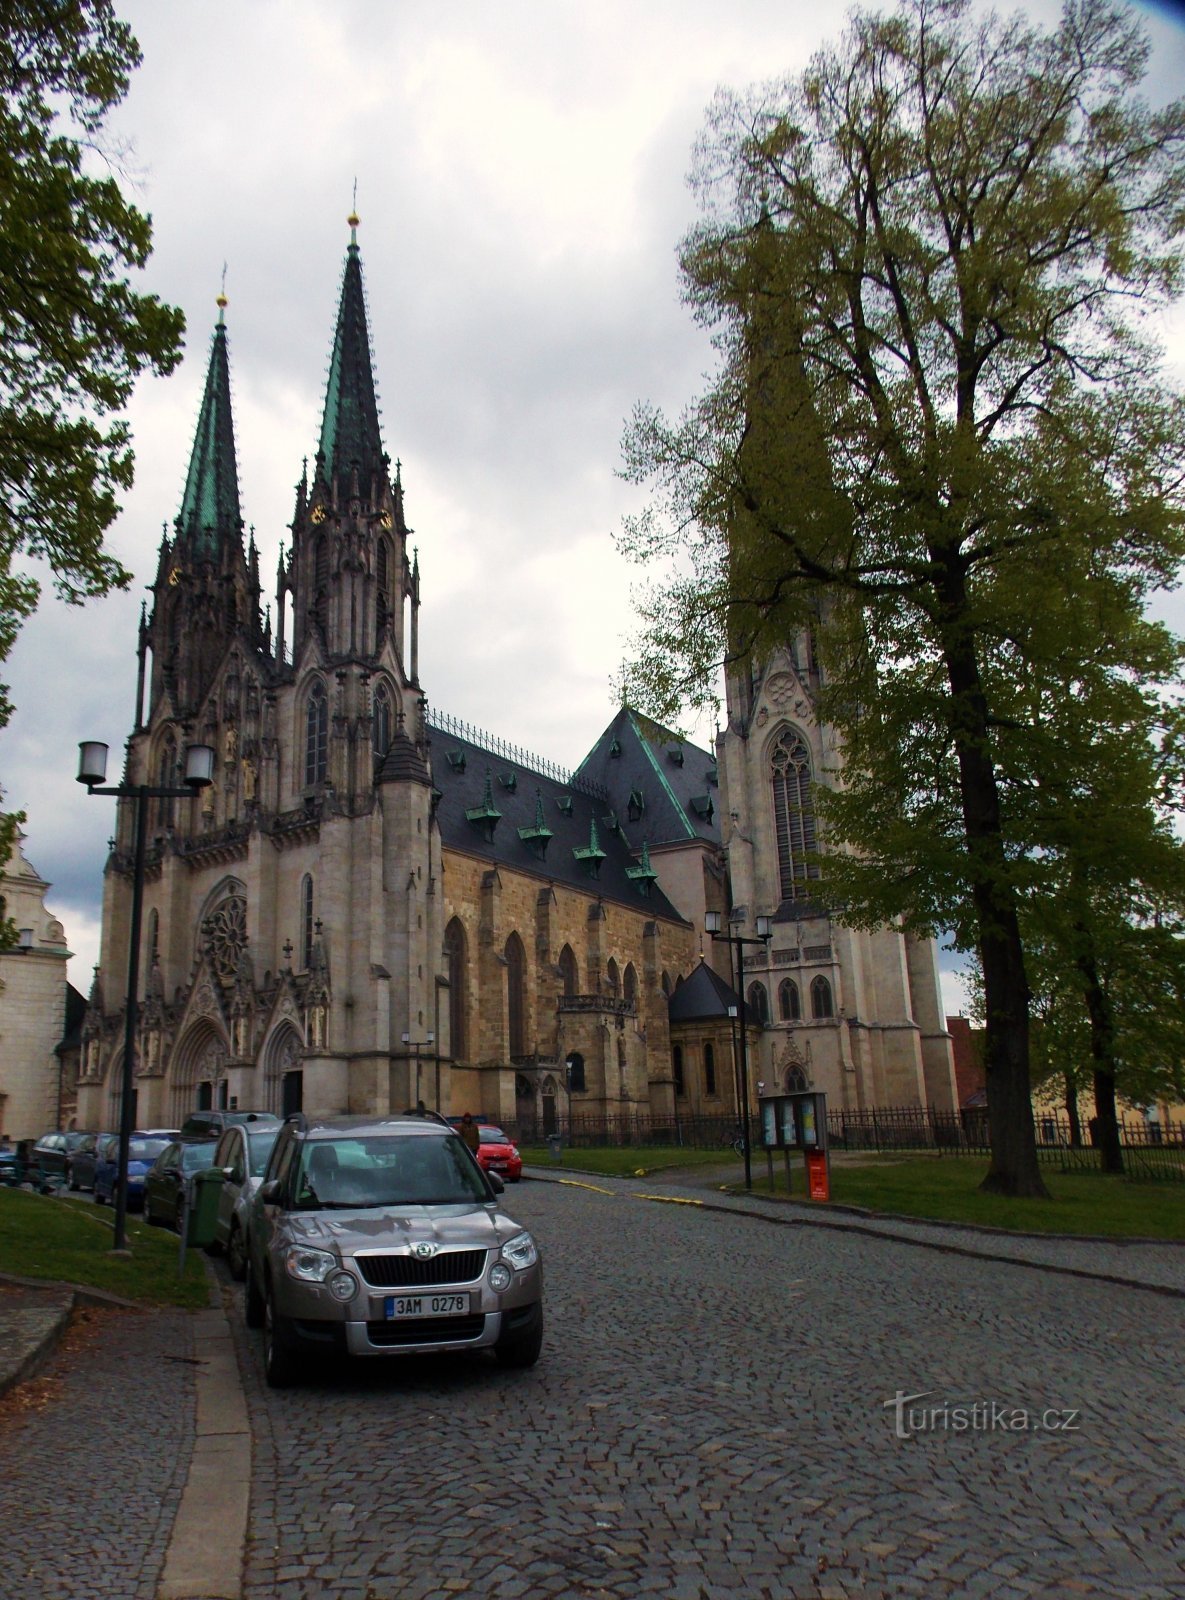 Cathedral of St. Wenceslas at the U Dómu hotel